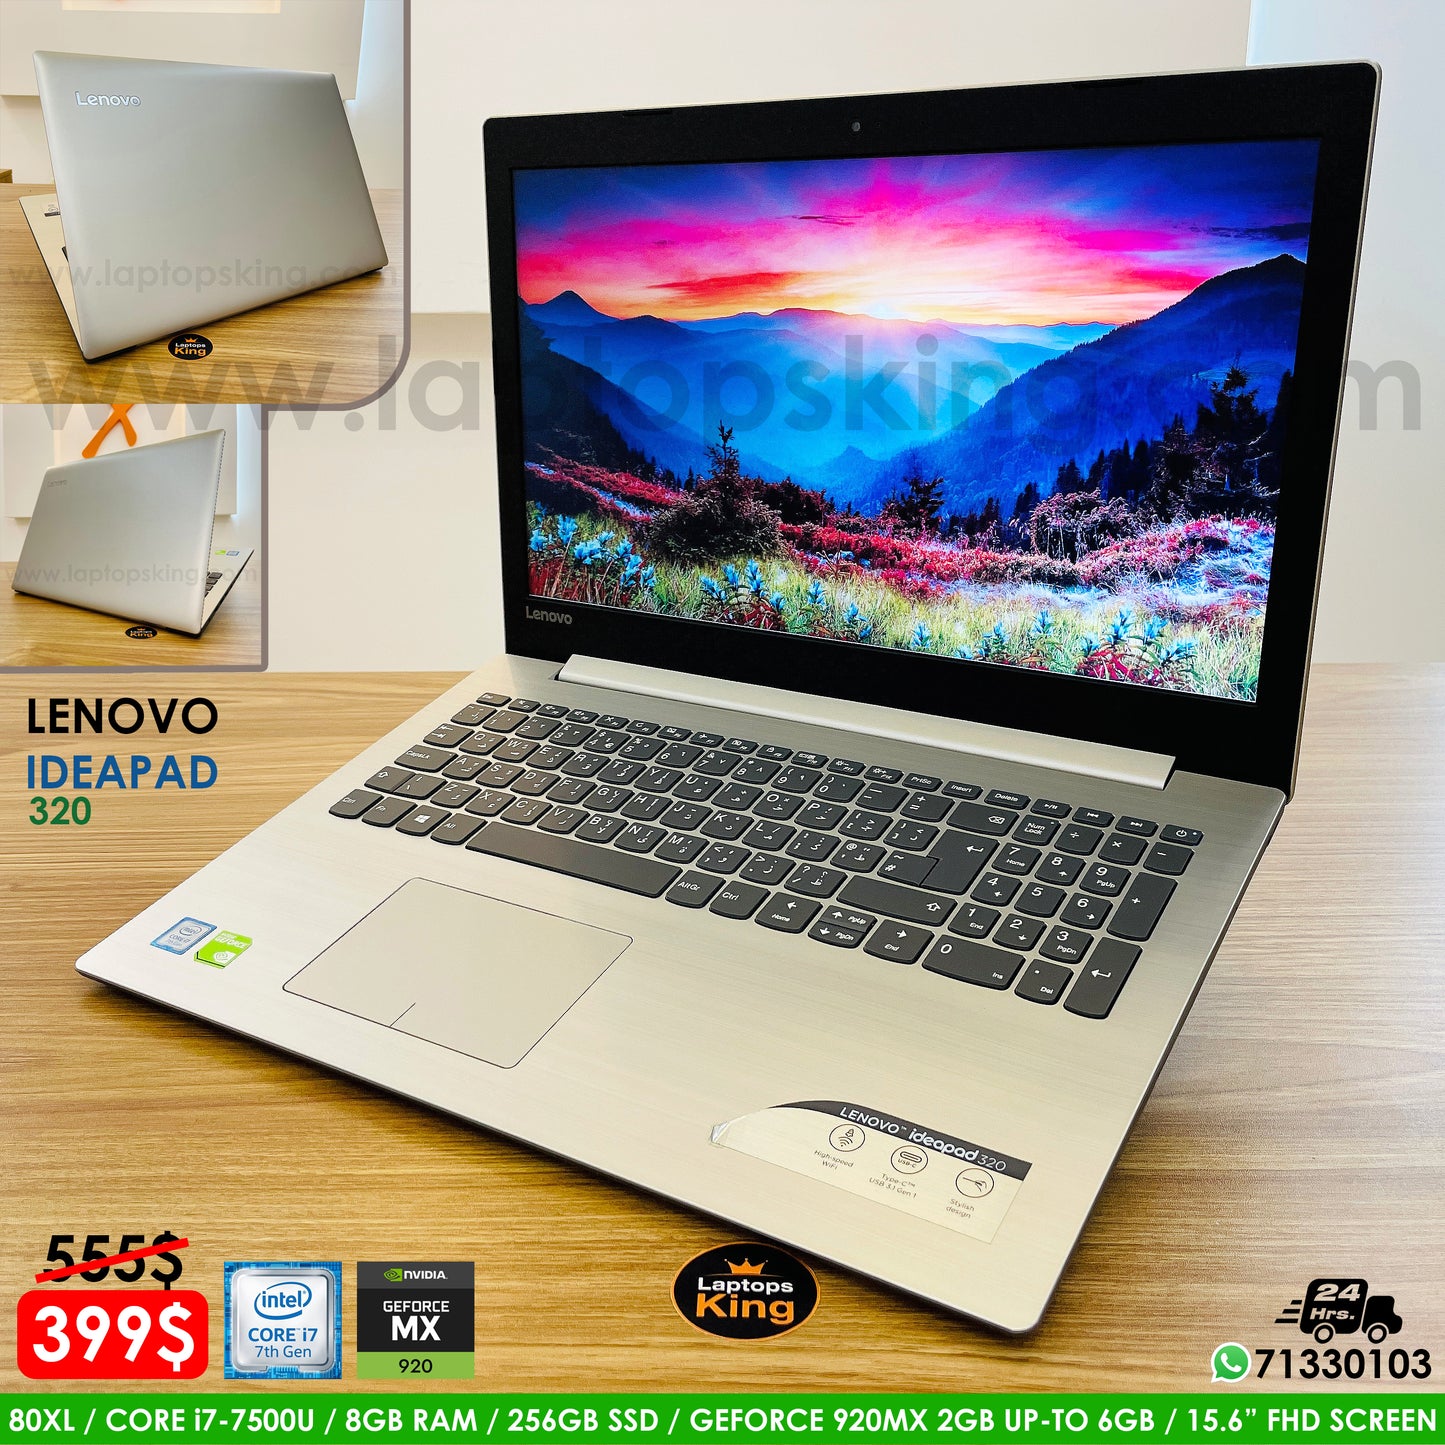 Lenovo IdeaPad 320 80XL i7-7500u 920MX 15.6" Laptop (Used Very Clean)